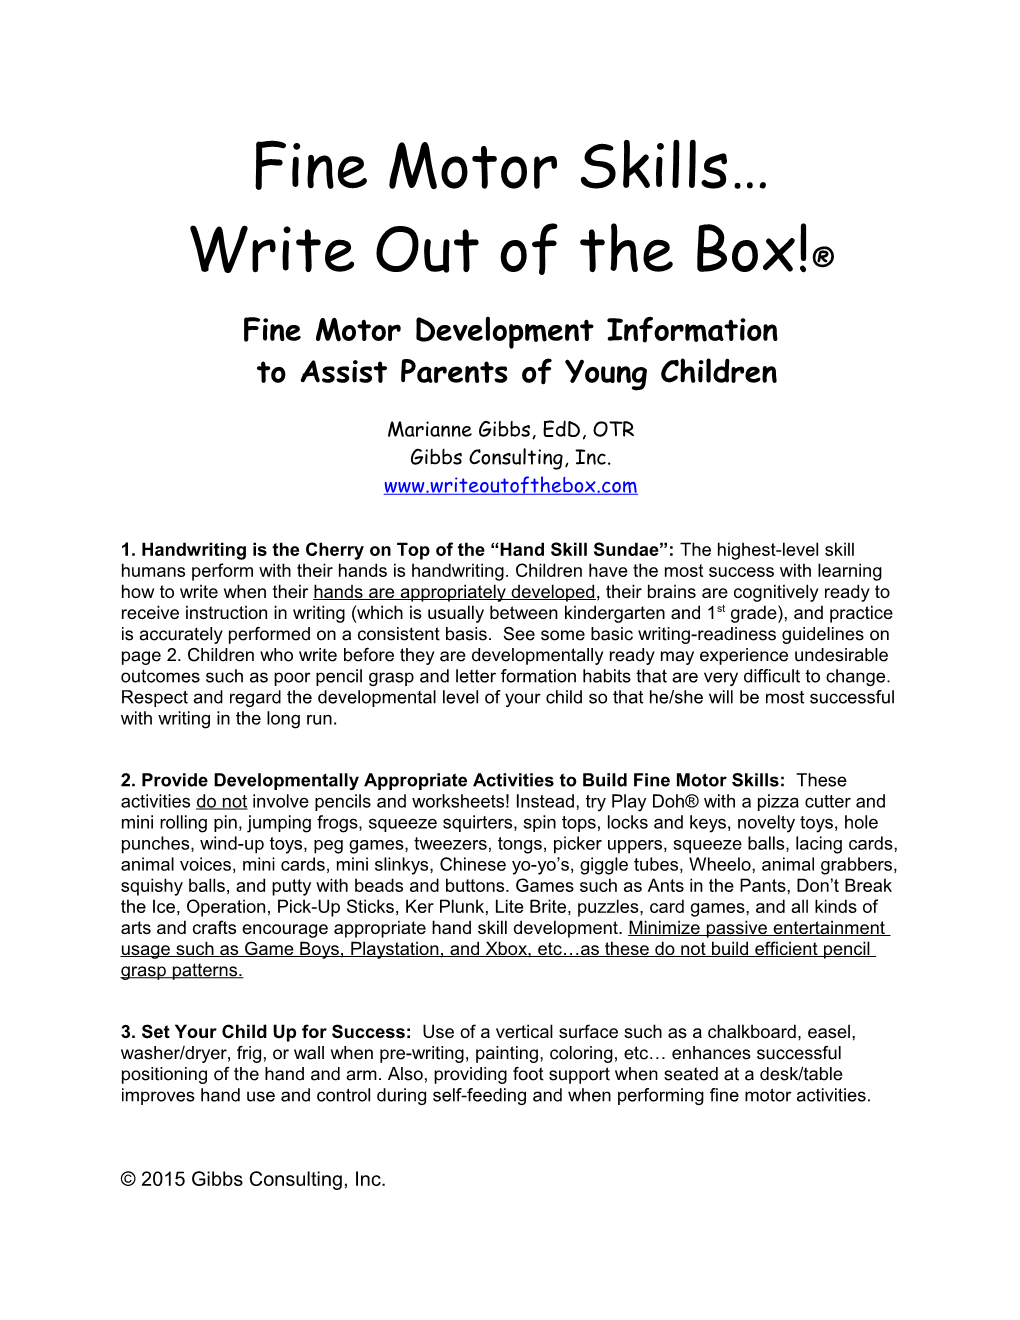 Fine Motor Development Information